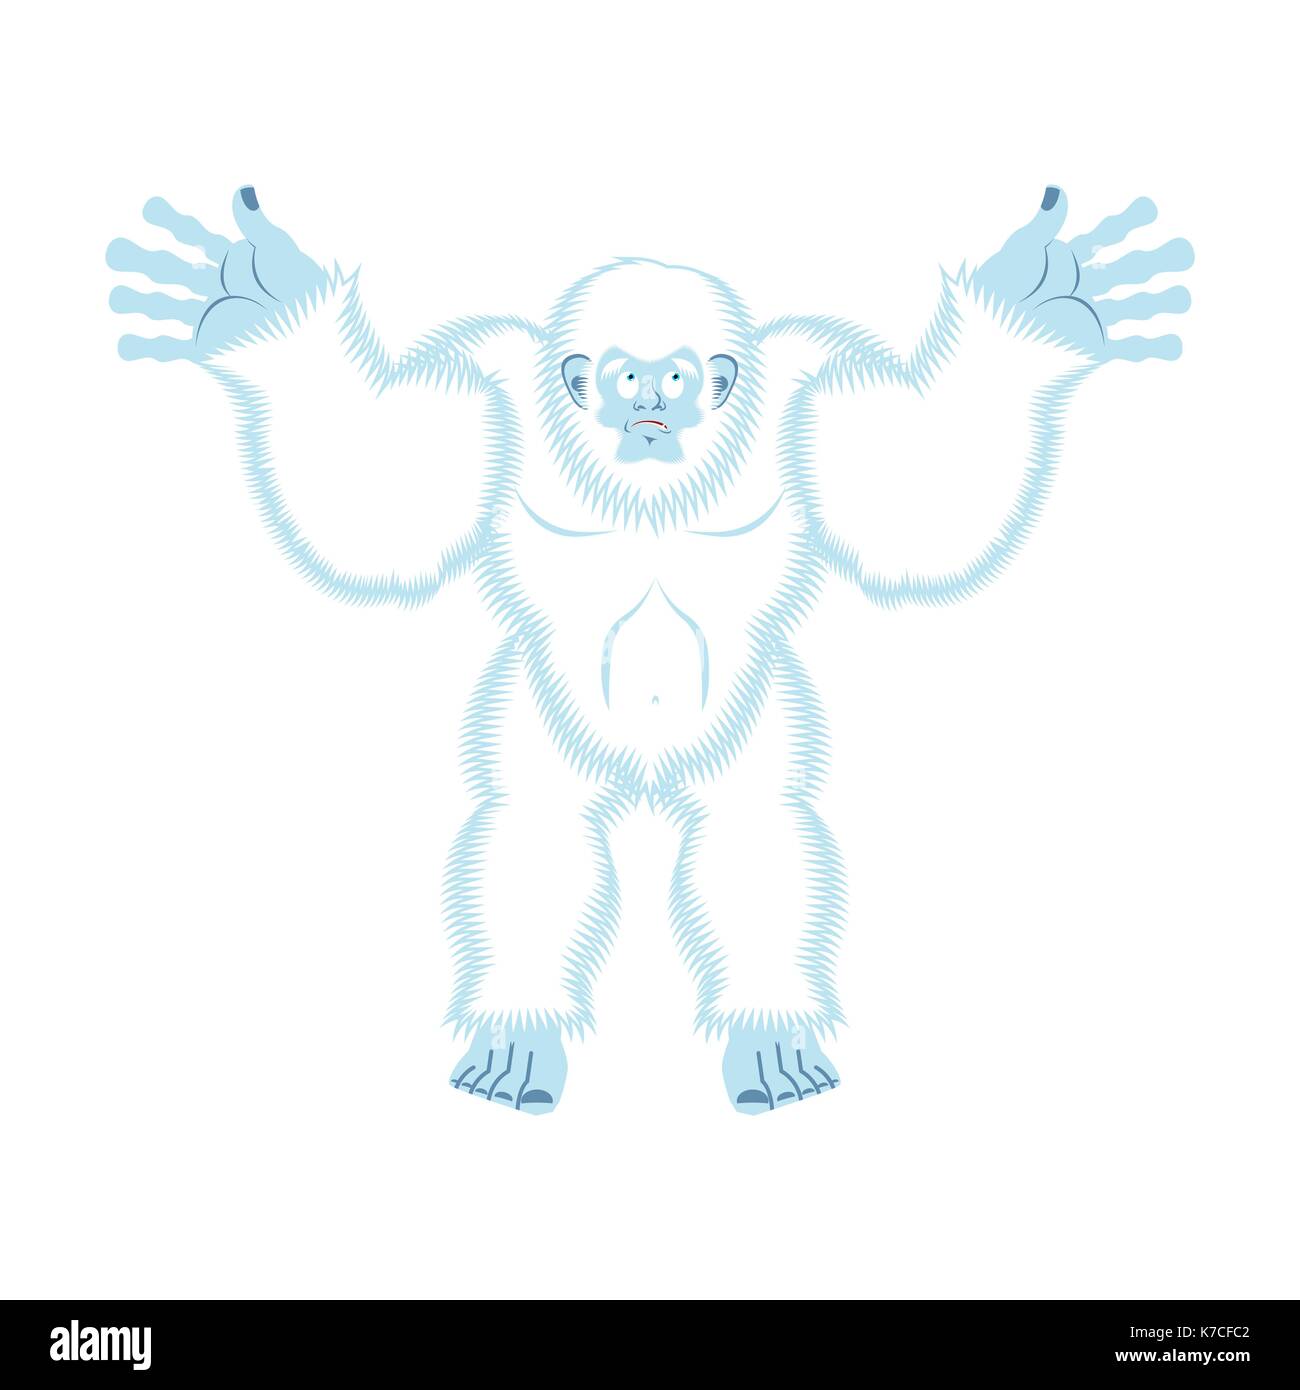 https://c8.alamy.com/comp/K7CFC2/yeti-guilty-bigfoot-surprise-abominable-snowman-culpablen-vector-illustration-K7CFC2.jpg